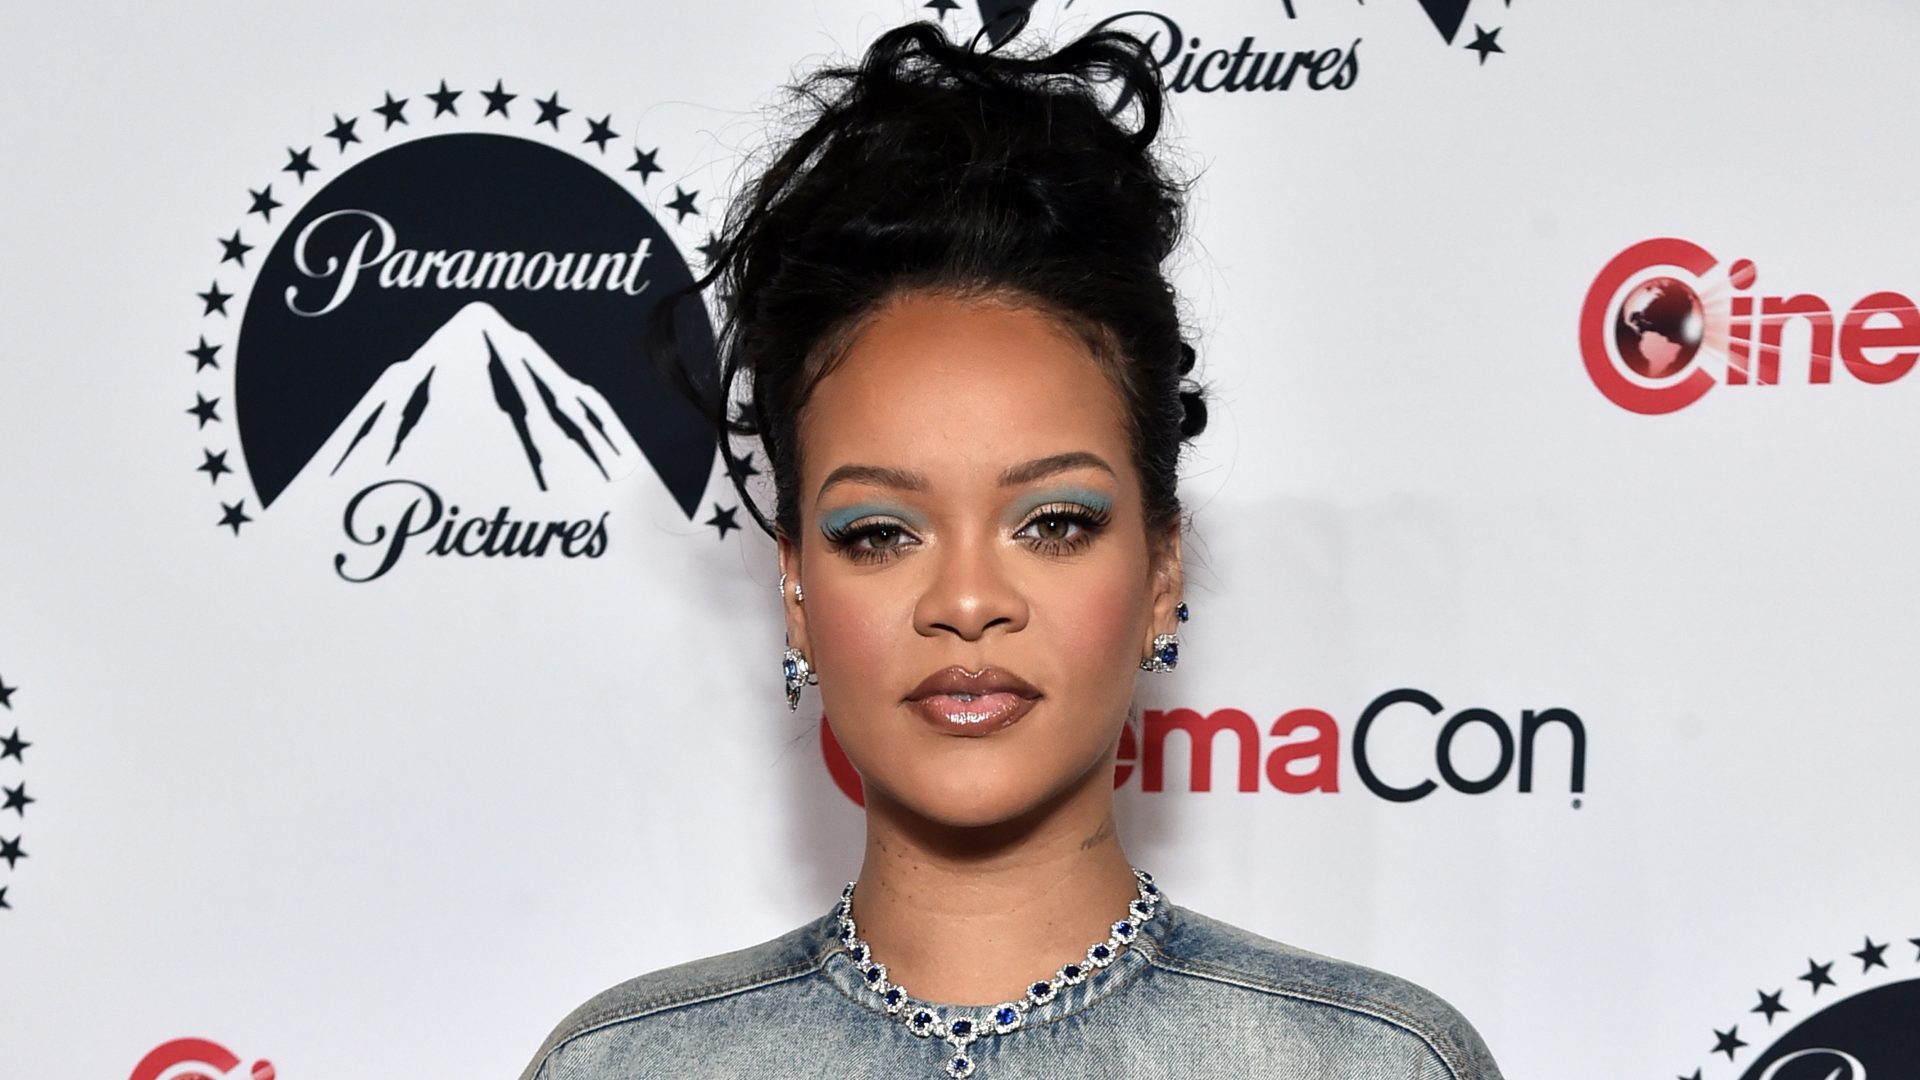 LAS VEGAS, NEVADA - APRIL 27: Rihanna poses for photos, promoting the upcoming film 